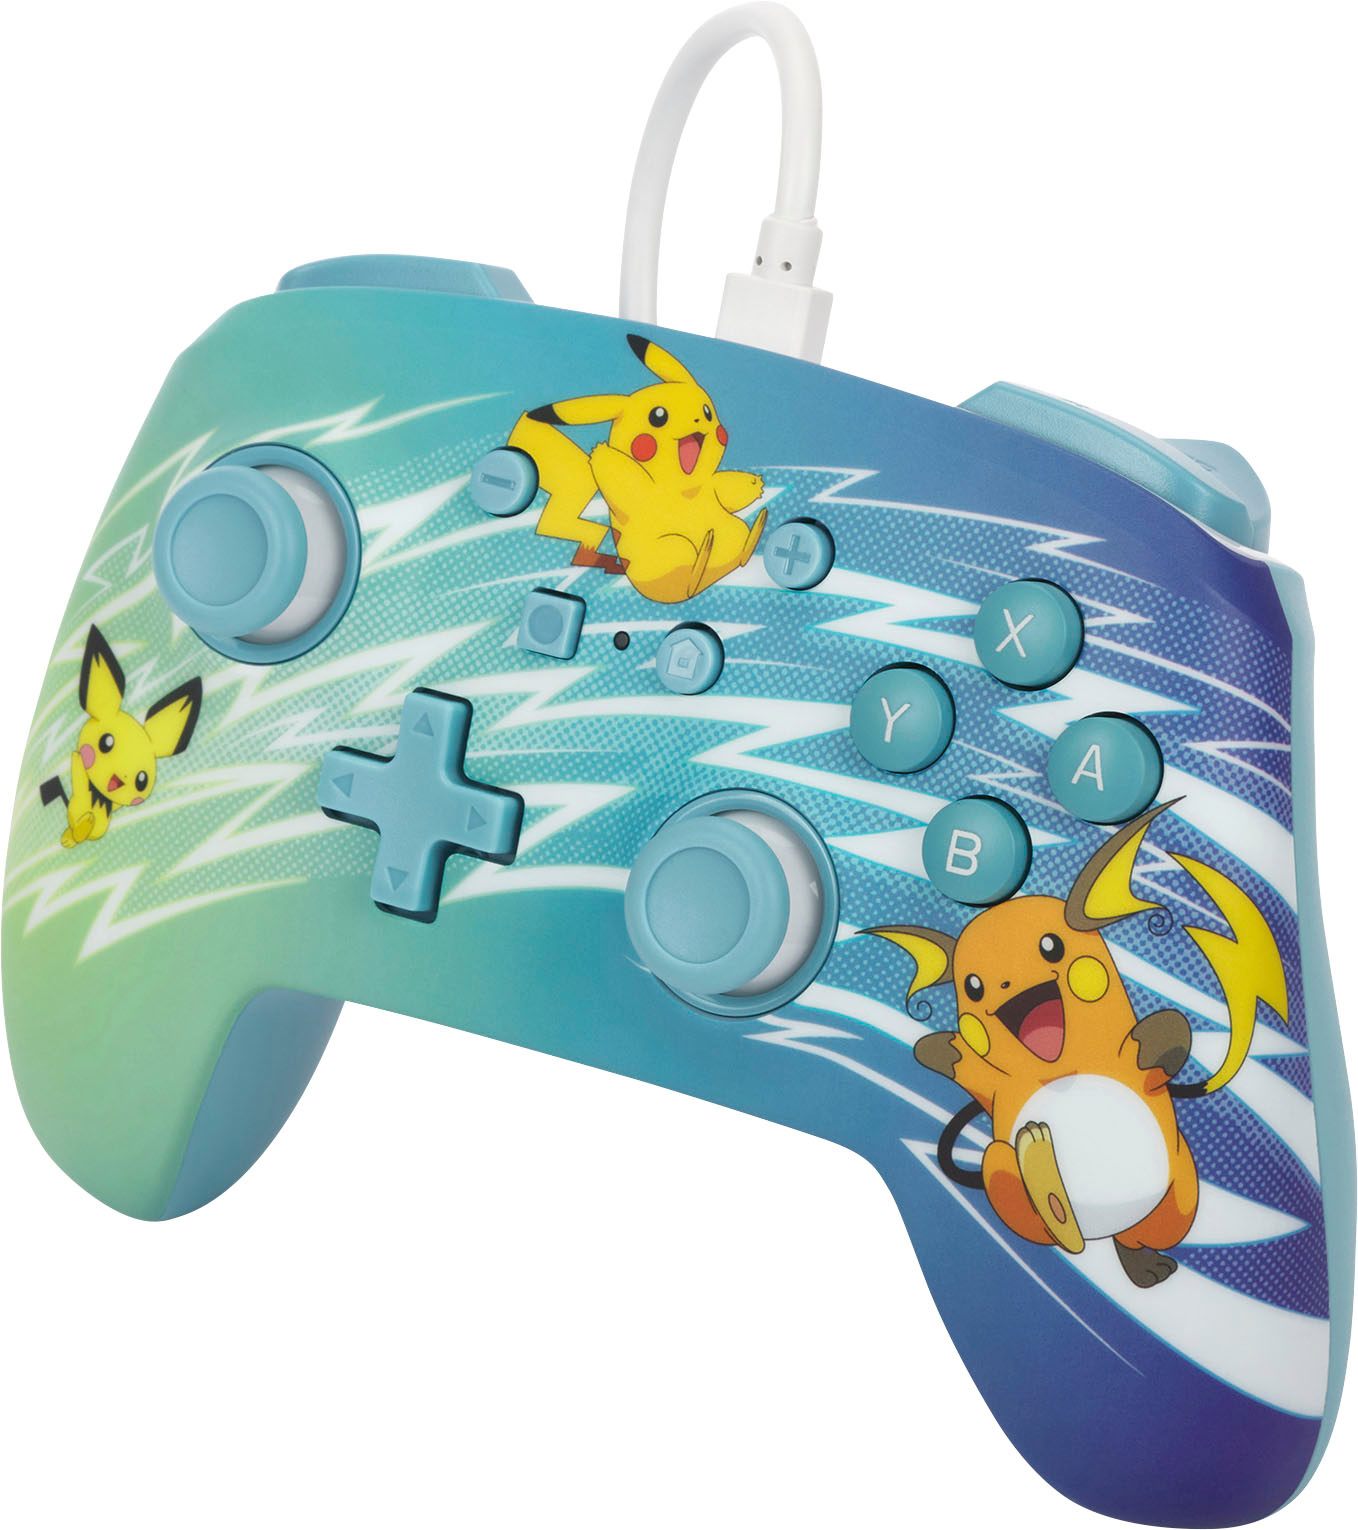 Enhanced Wireless Controller Pokémon: Pikachu Vortex